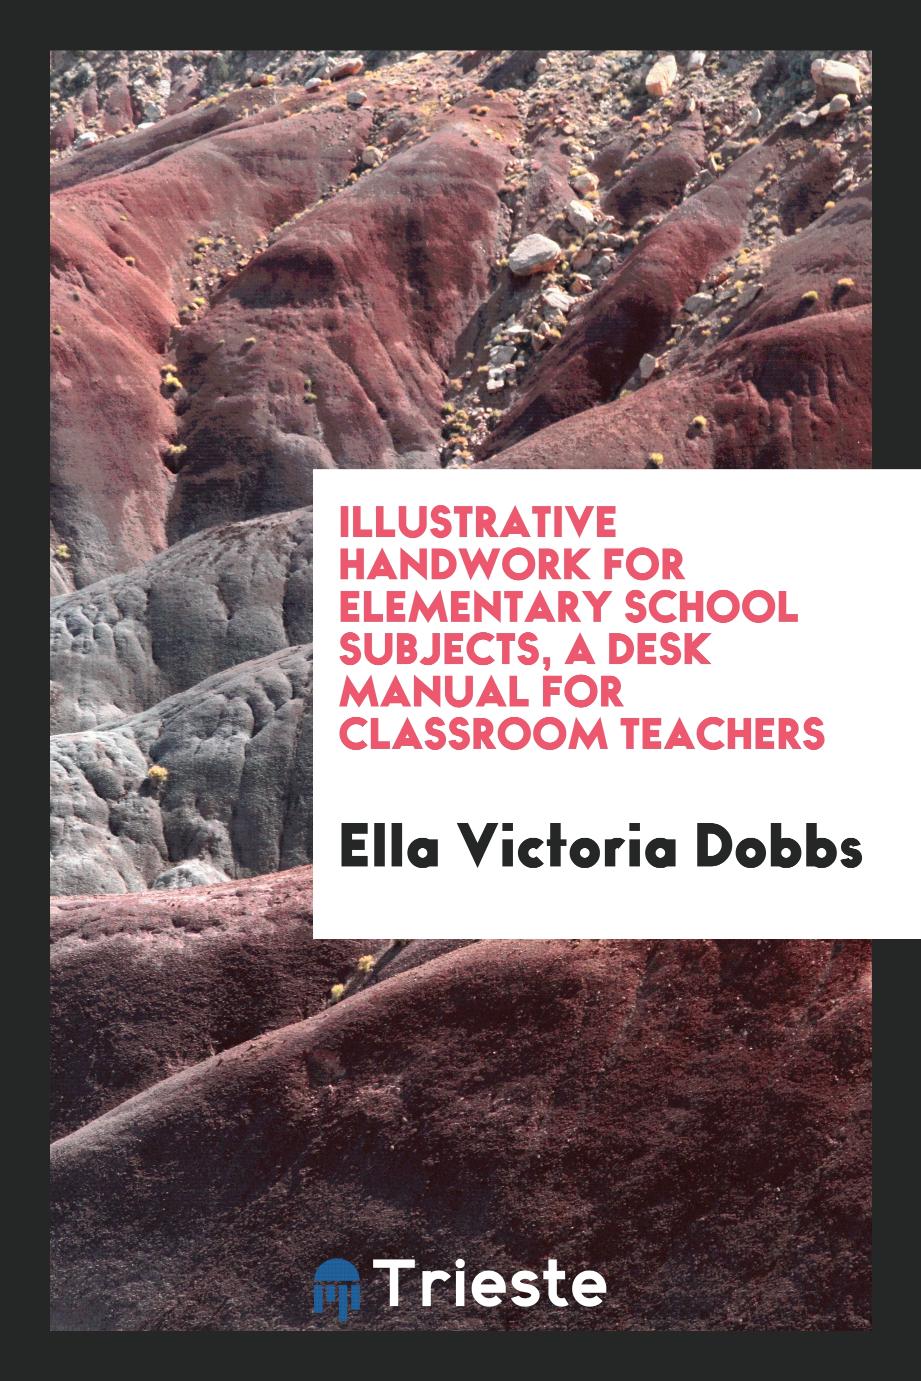 Illustrative handwork for elementary school subjects, a desk manual for classroom teachers